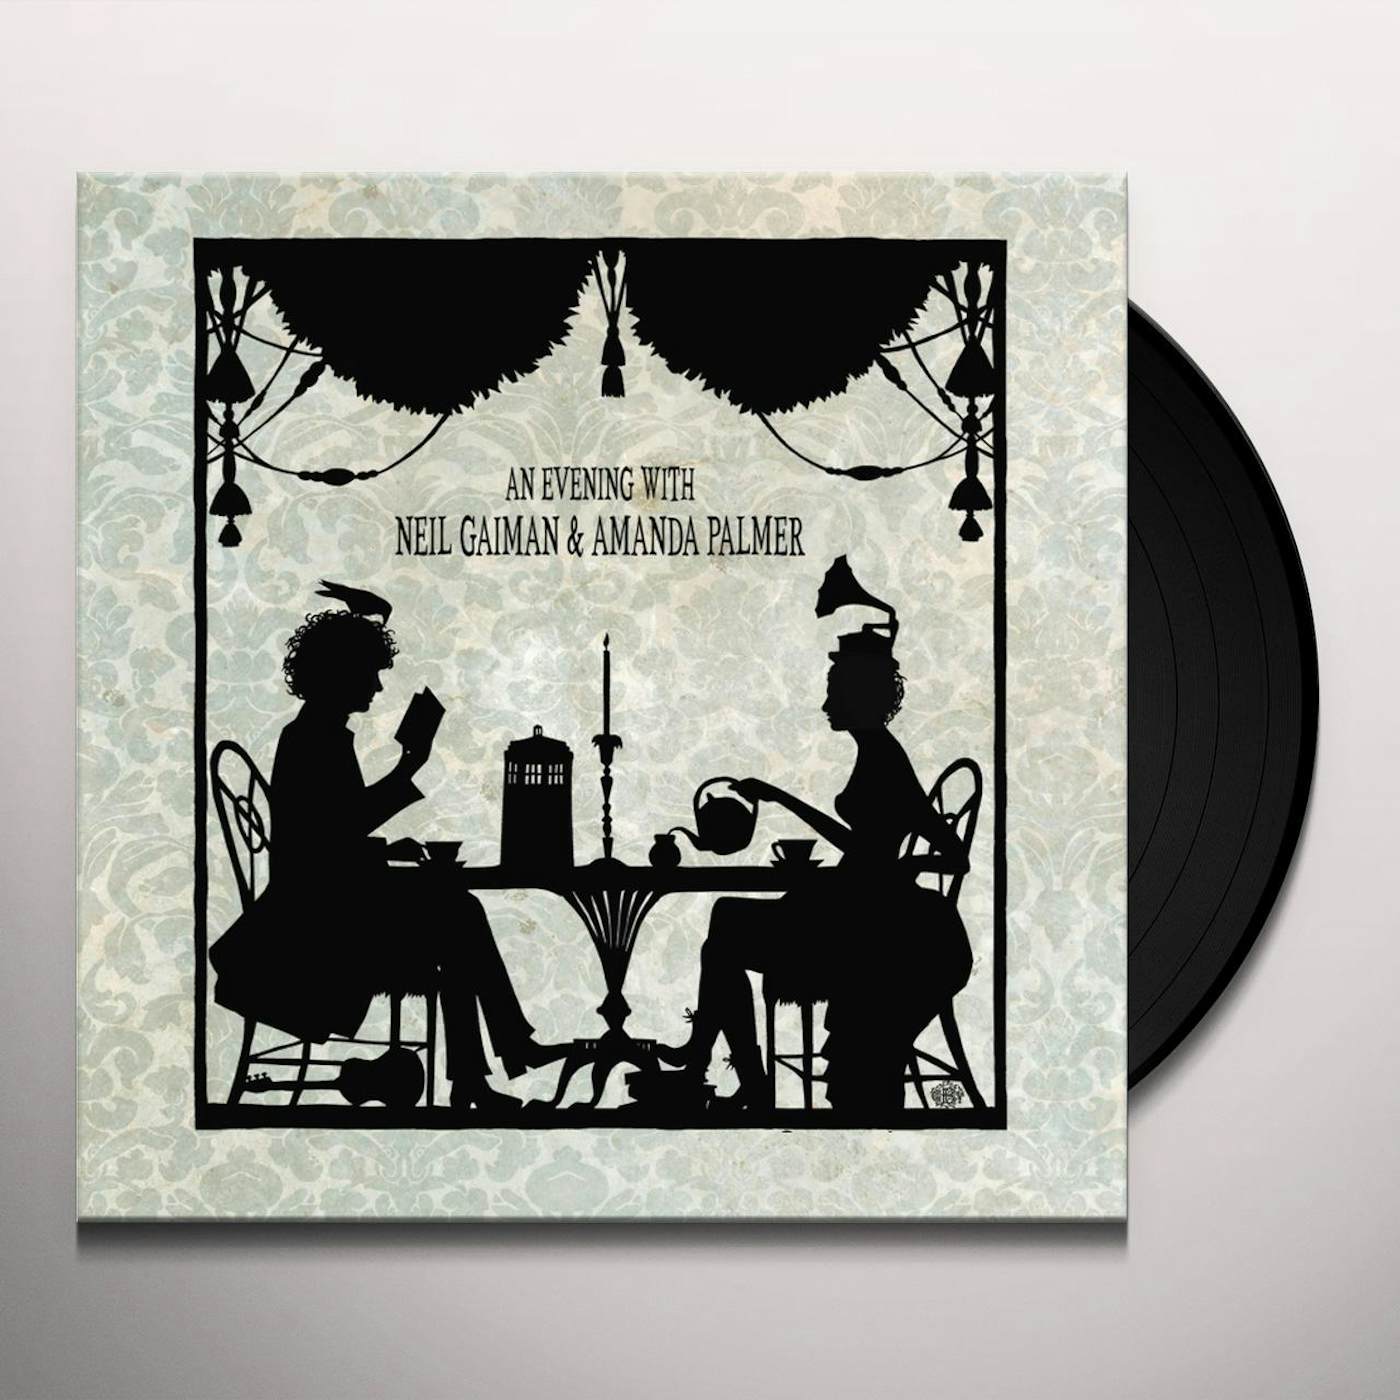 An Evening With Neil Gaiman & Amanda Palmer Vinyl Record